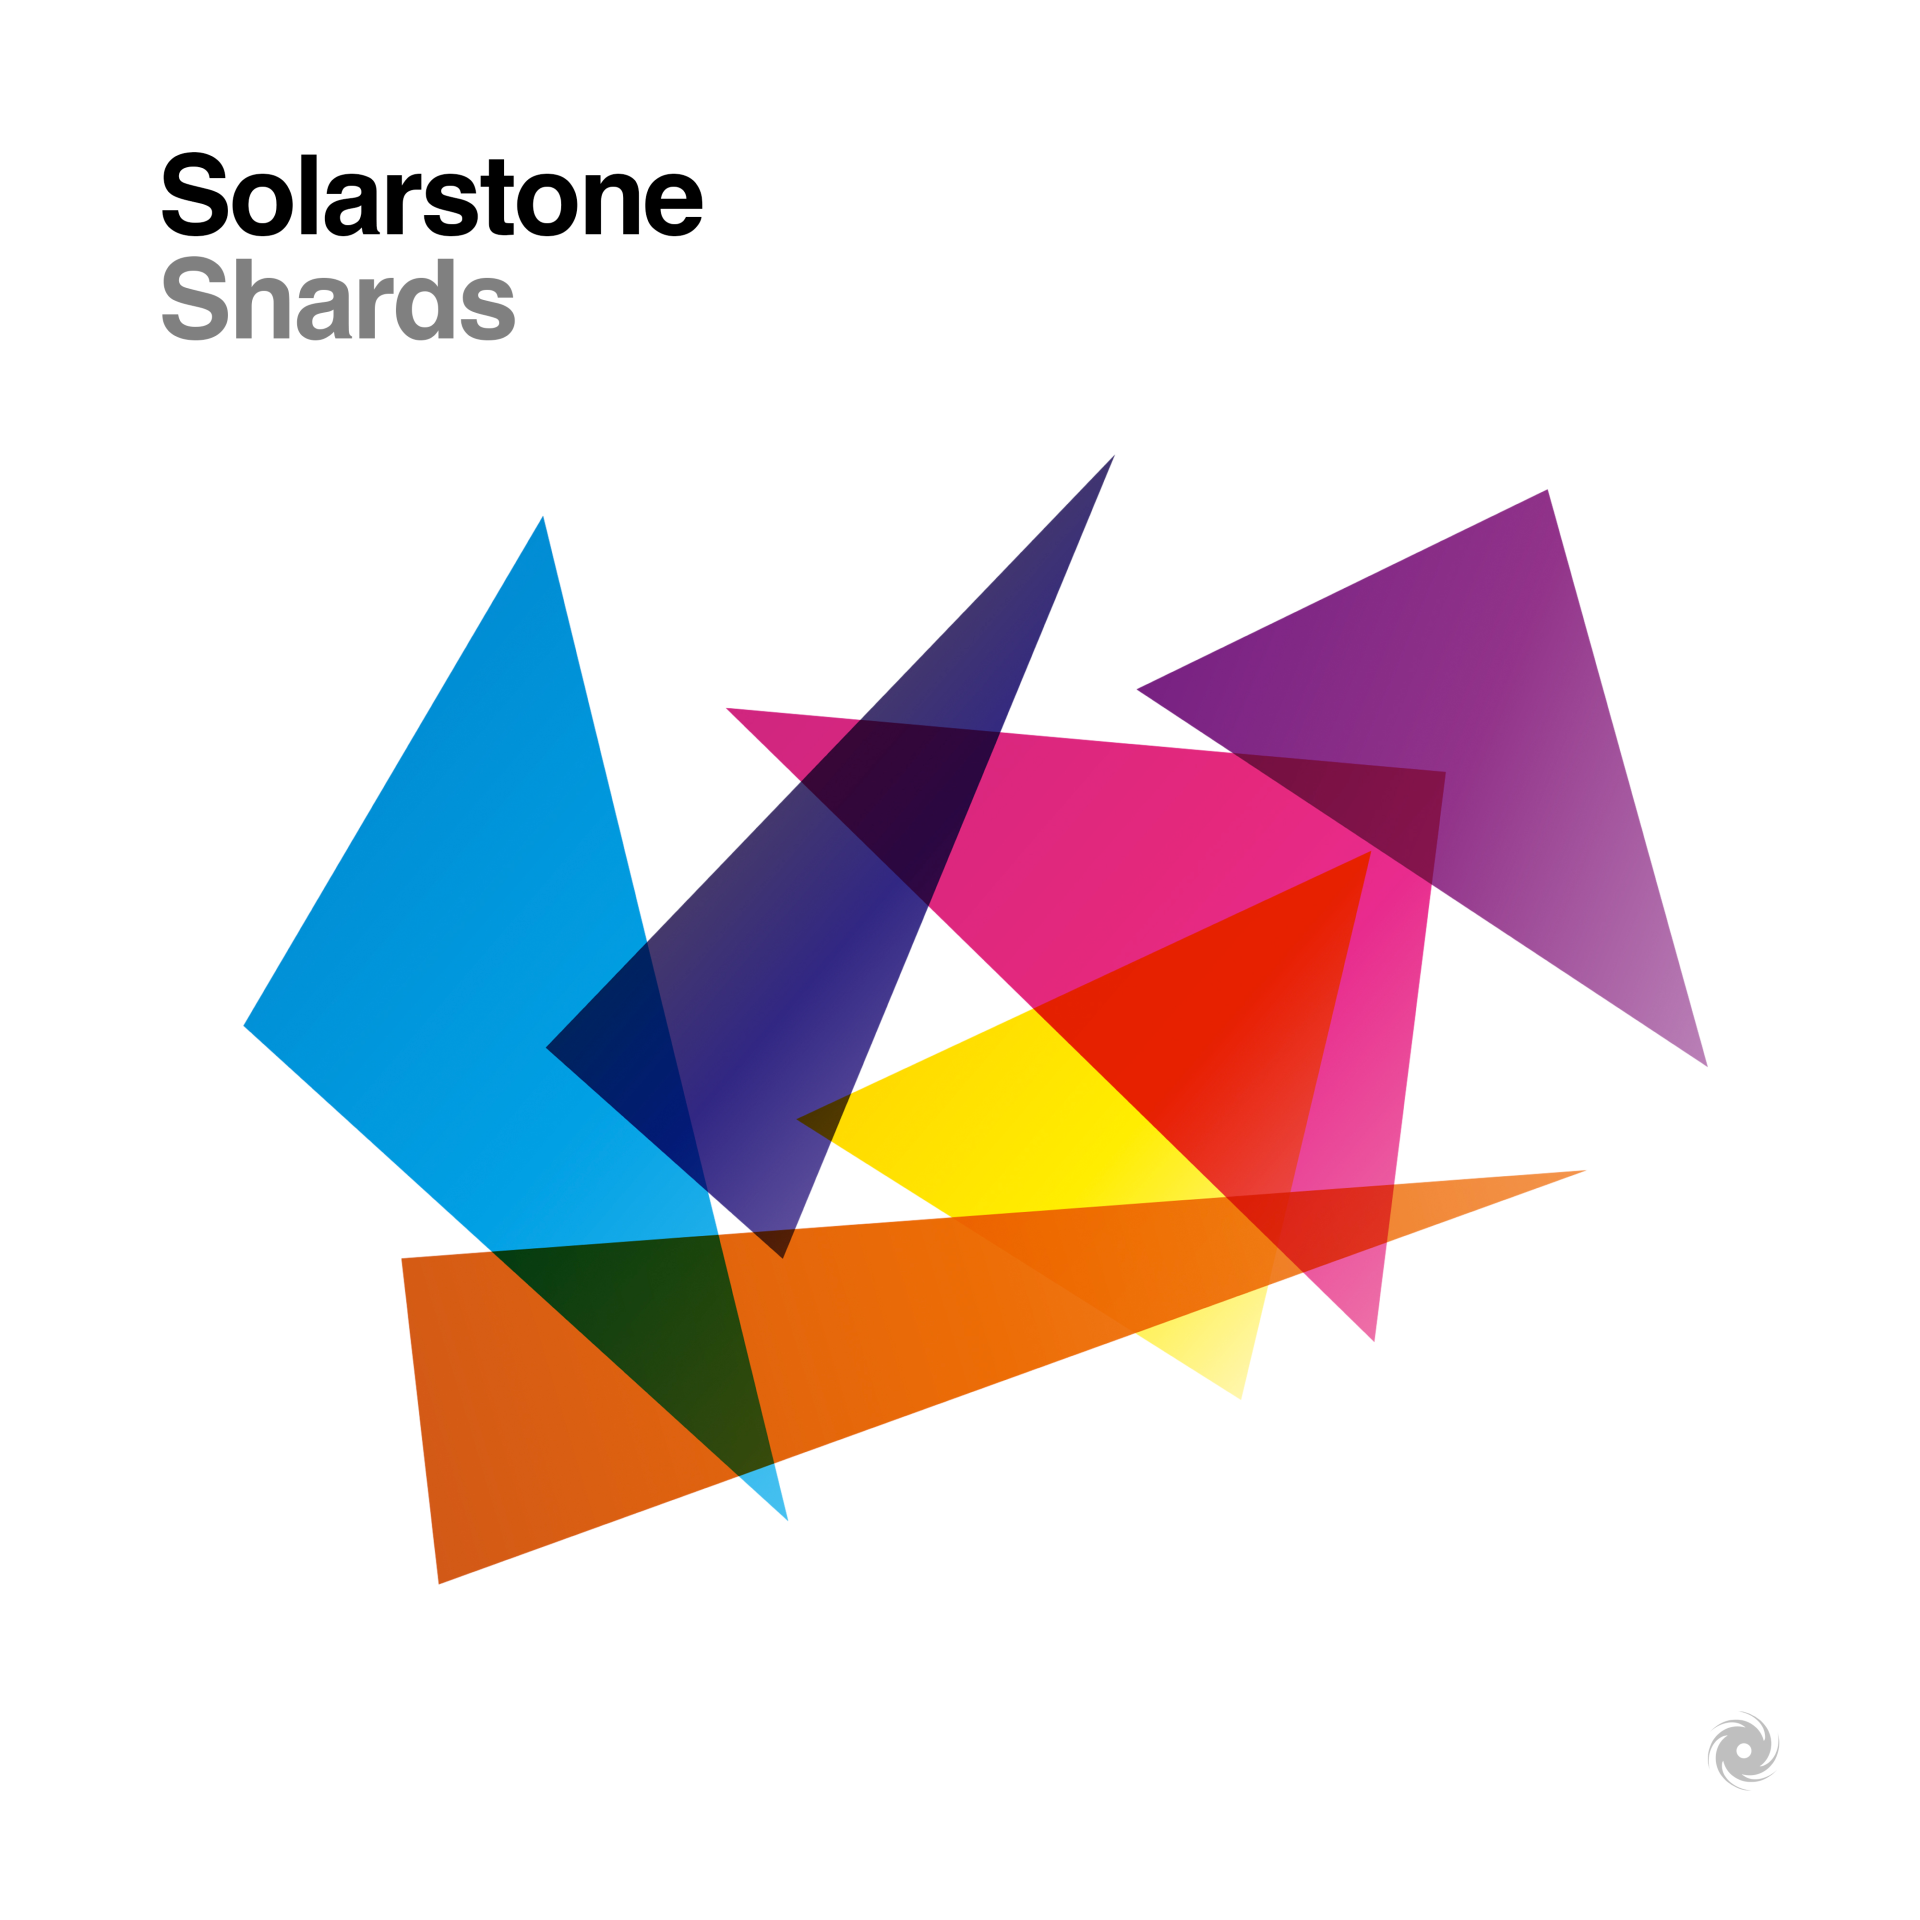 Solarstone’s “Shards” Gets Deep & Progressive Rework From LostLegend